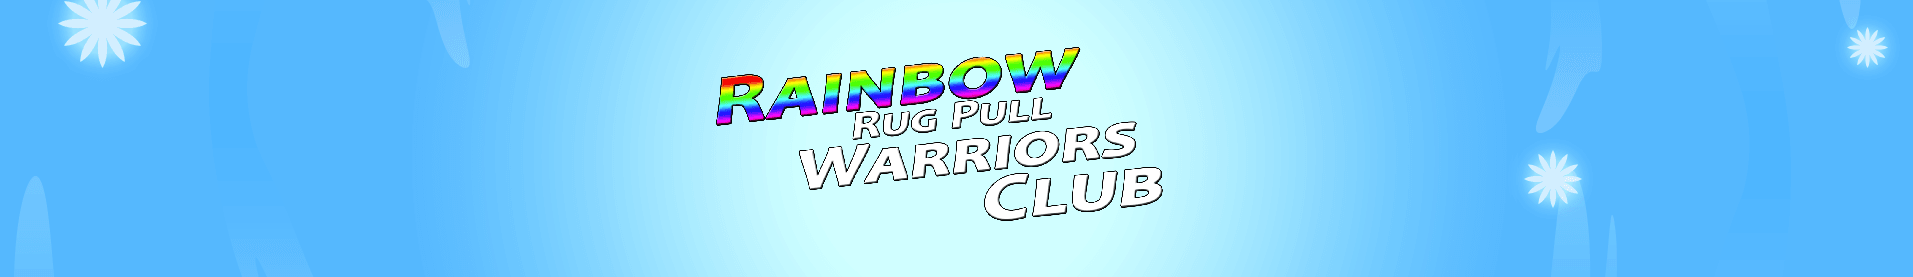 Rainbow_Rug_Pull_Warriors_Club バナー